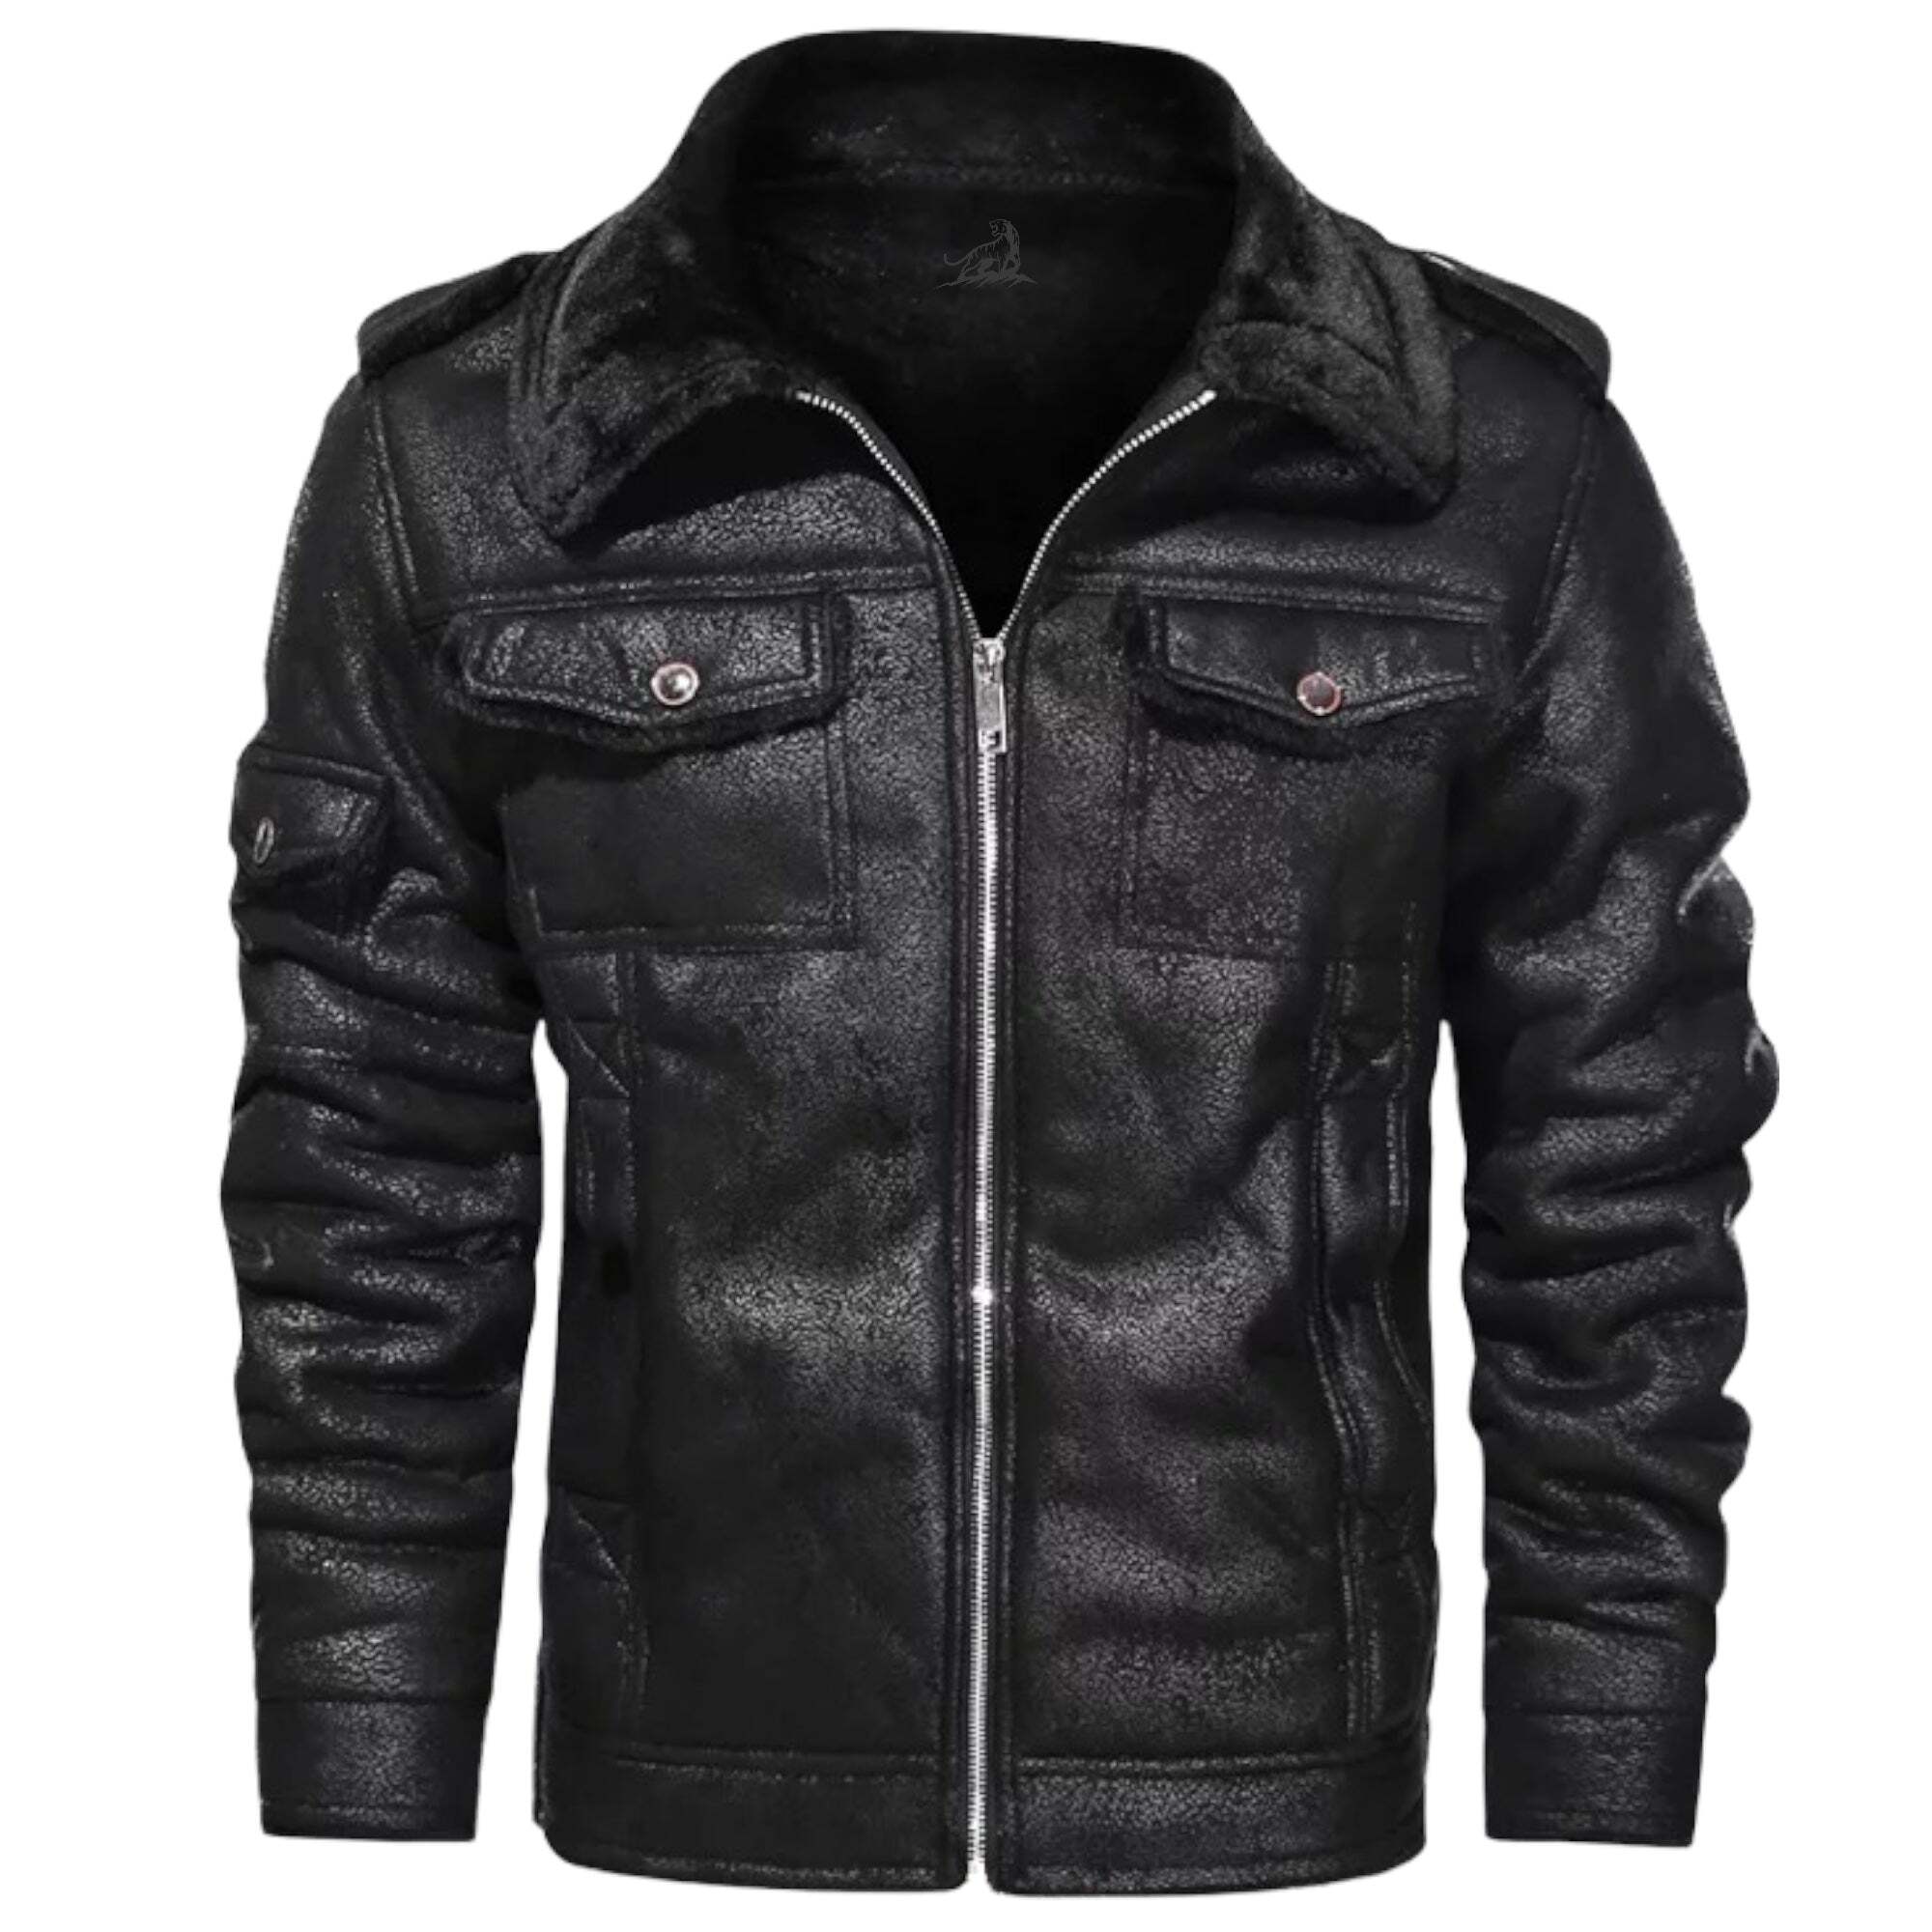 'Urban Legend' Leather Jacket